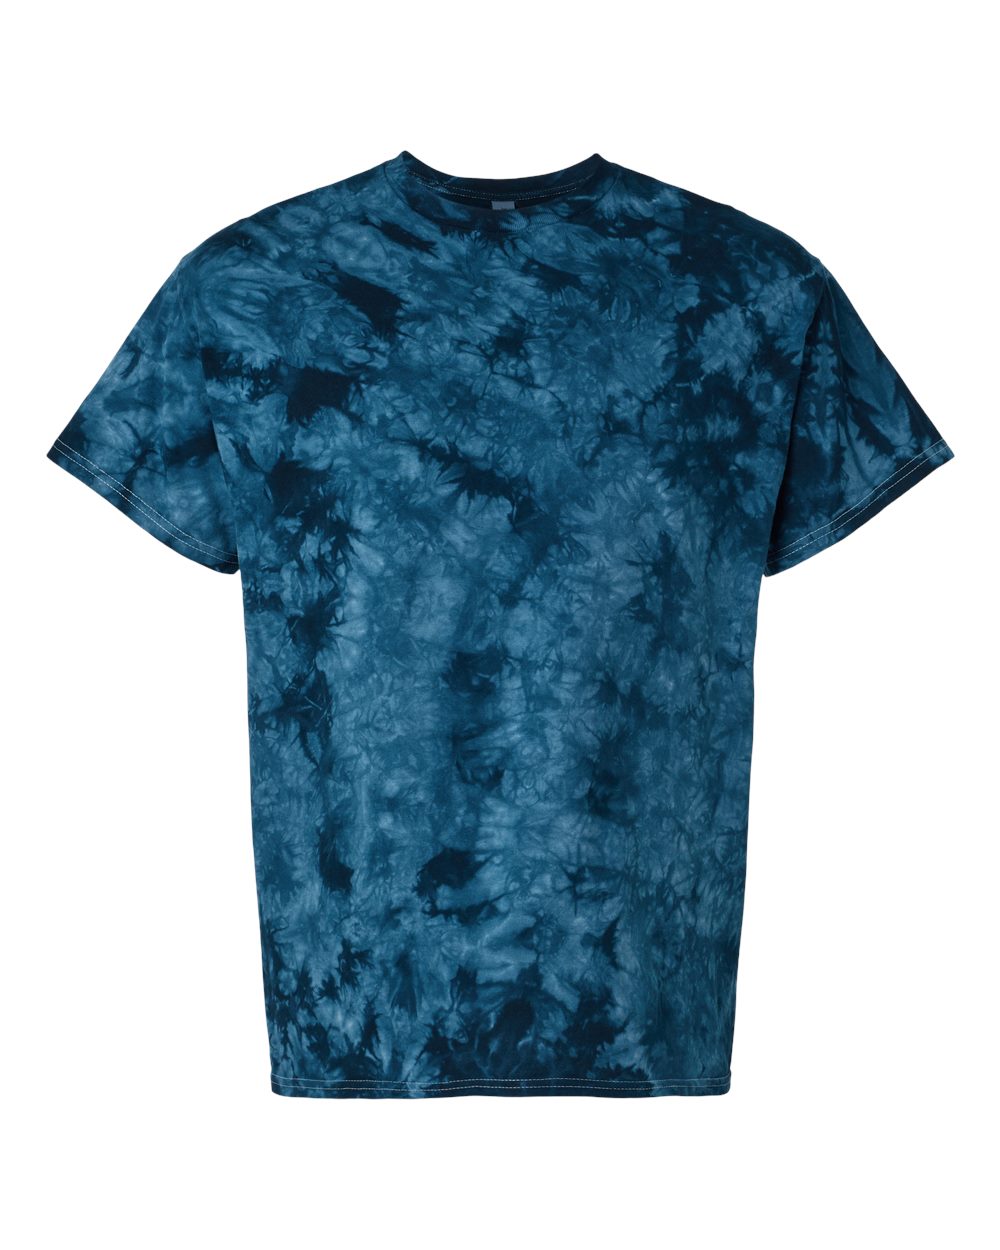 Dyenomite- Tie-Dyed T-Shirt-Navy Crystal